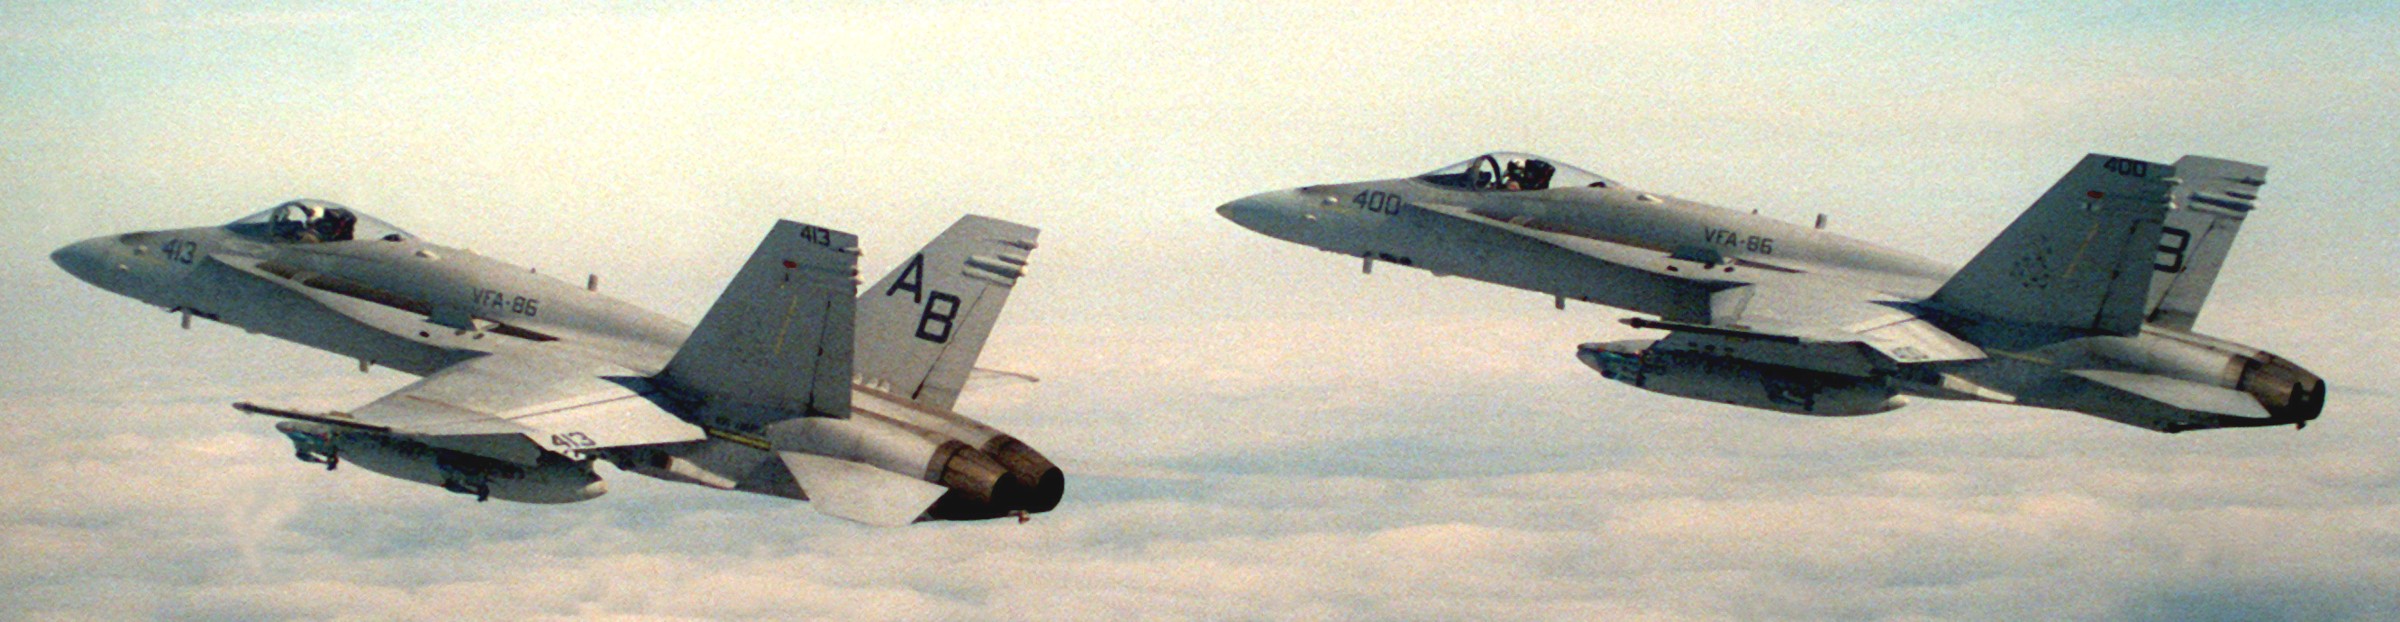 vfa-86 sidewinders strike fighter squadron f/a-18c hornet us navy townsend bombing range georgia 08